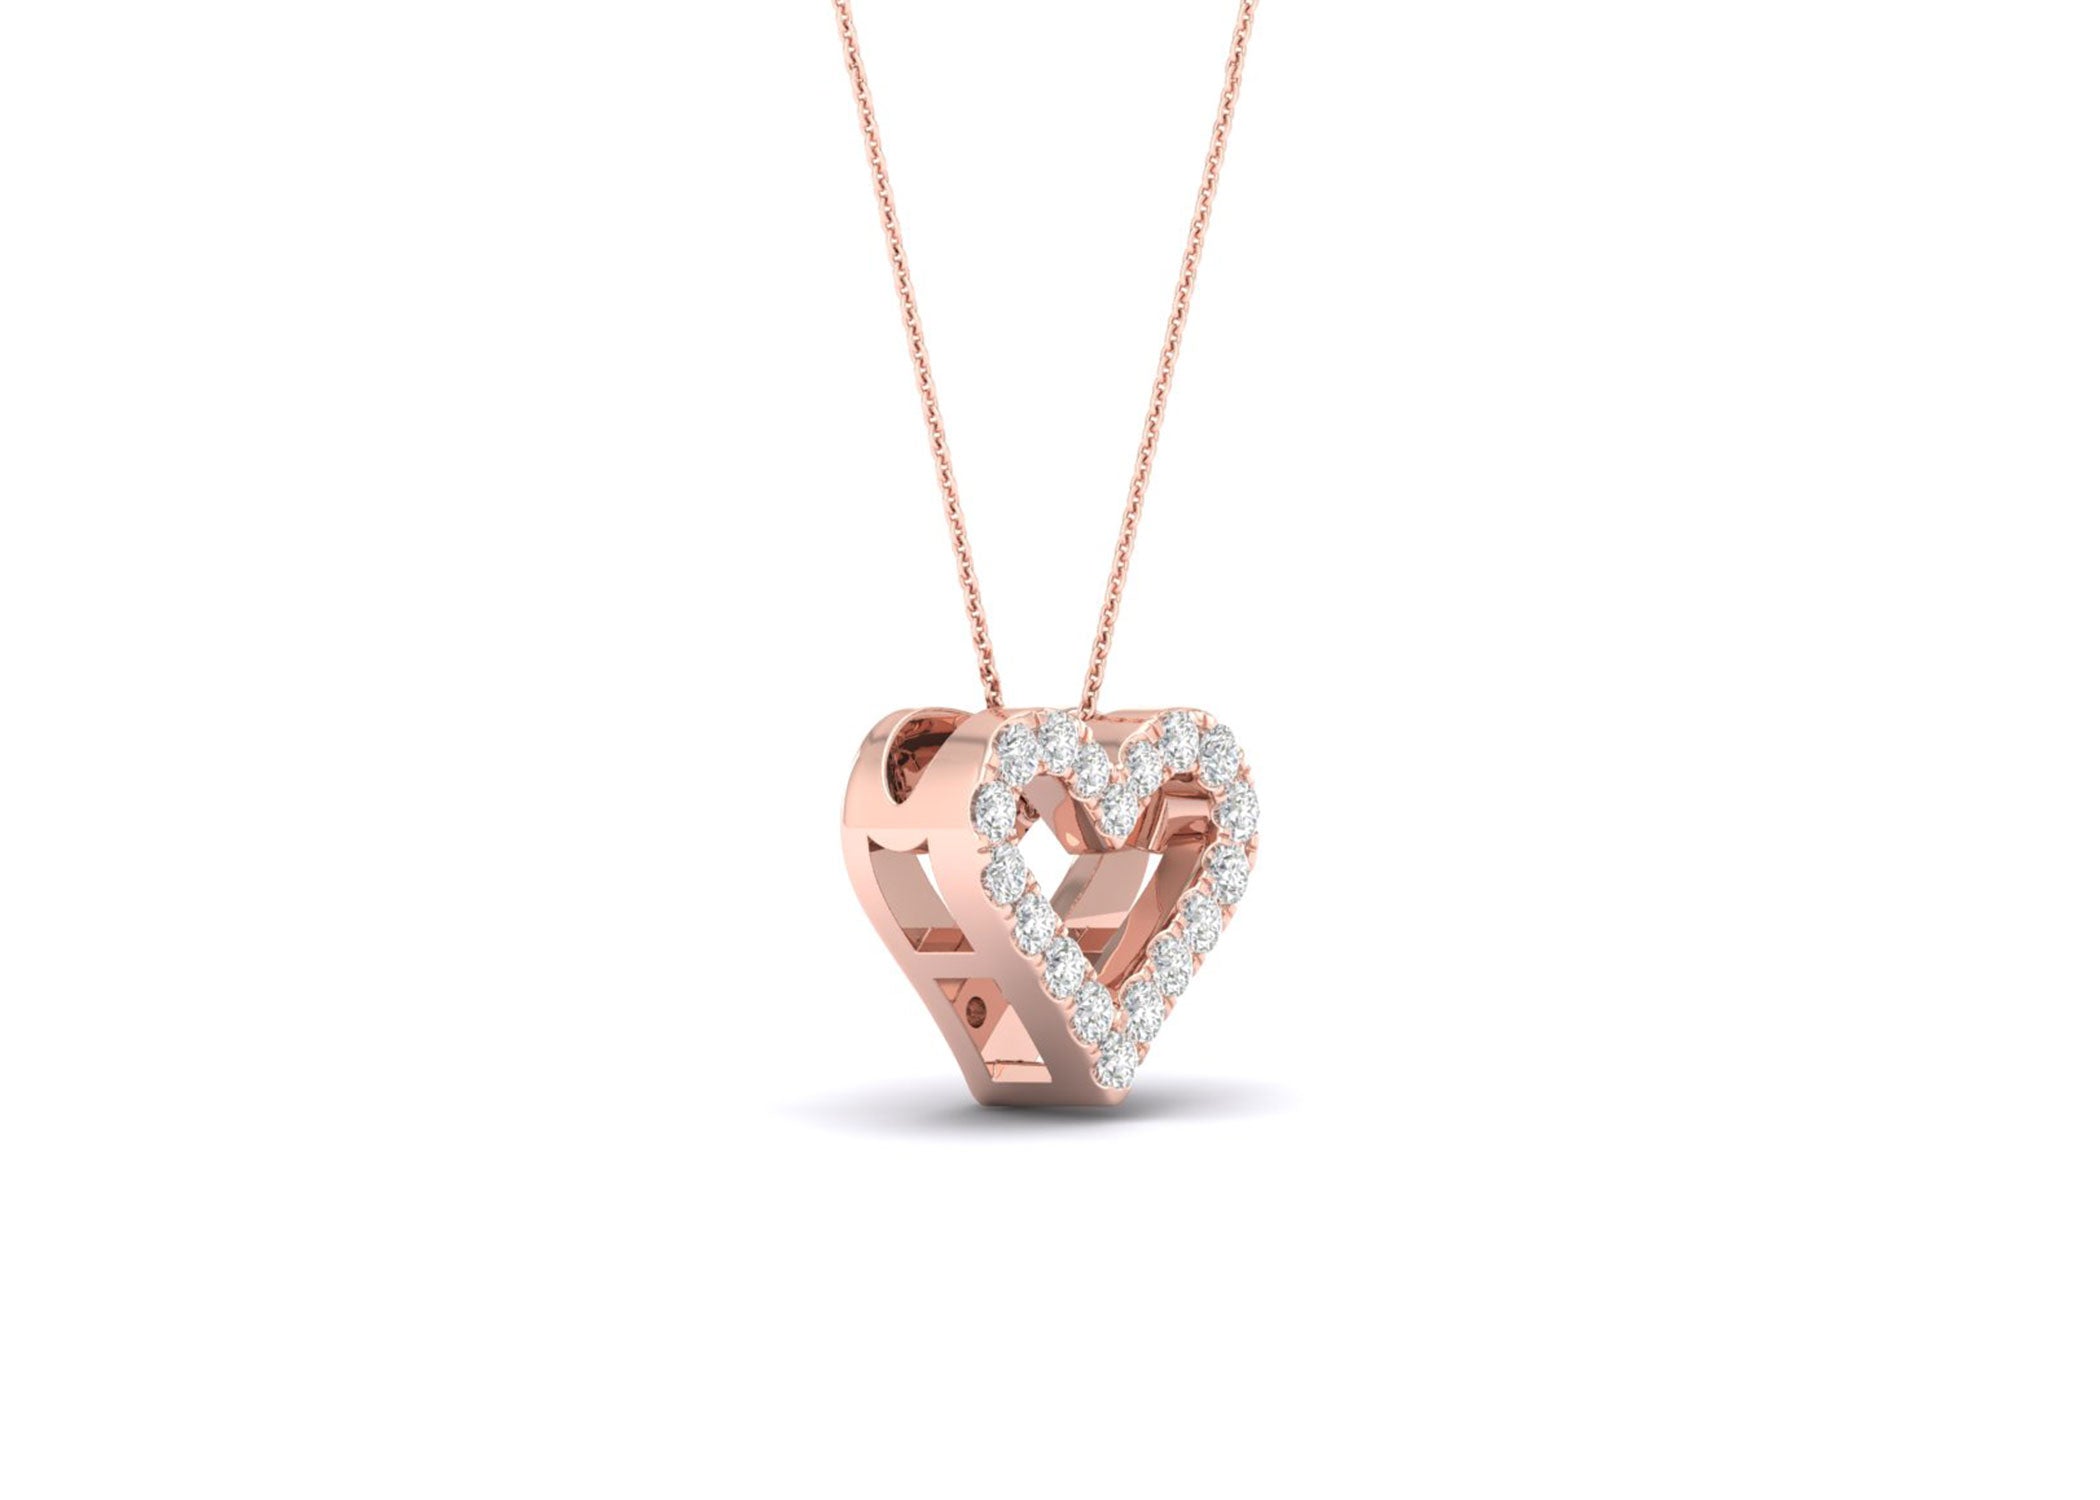 Petite Heart Silhouette Necklace - Necklace 